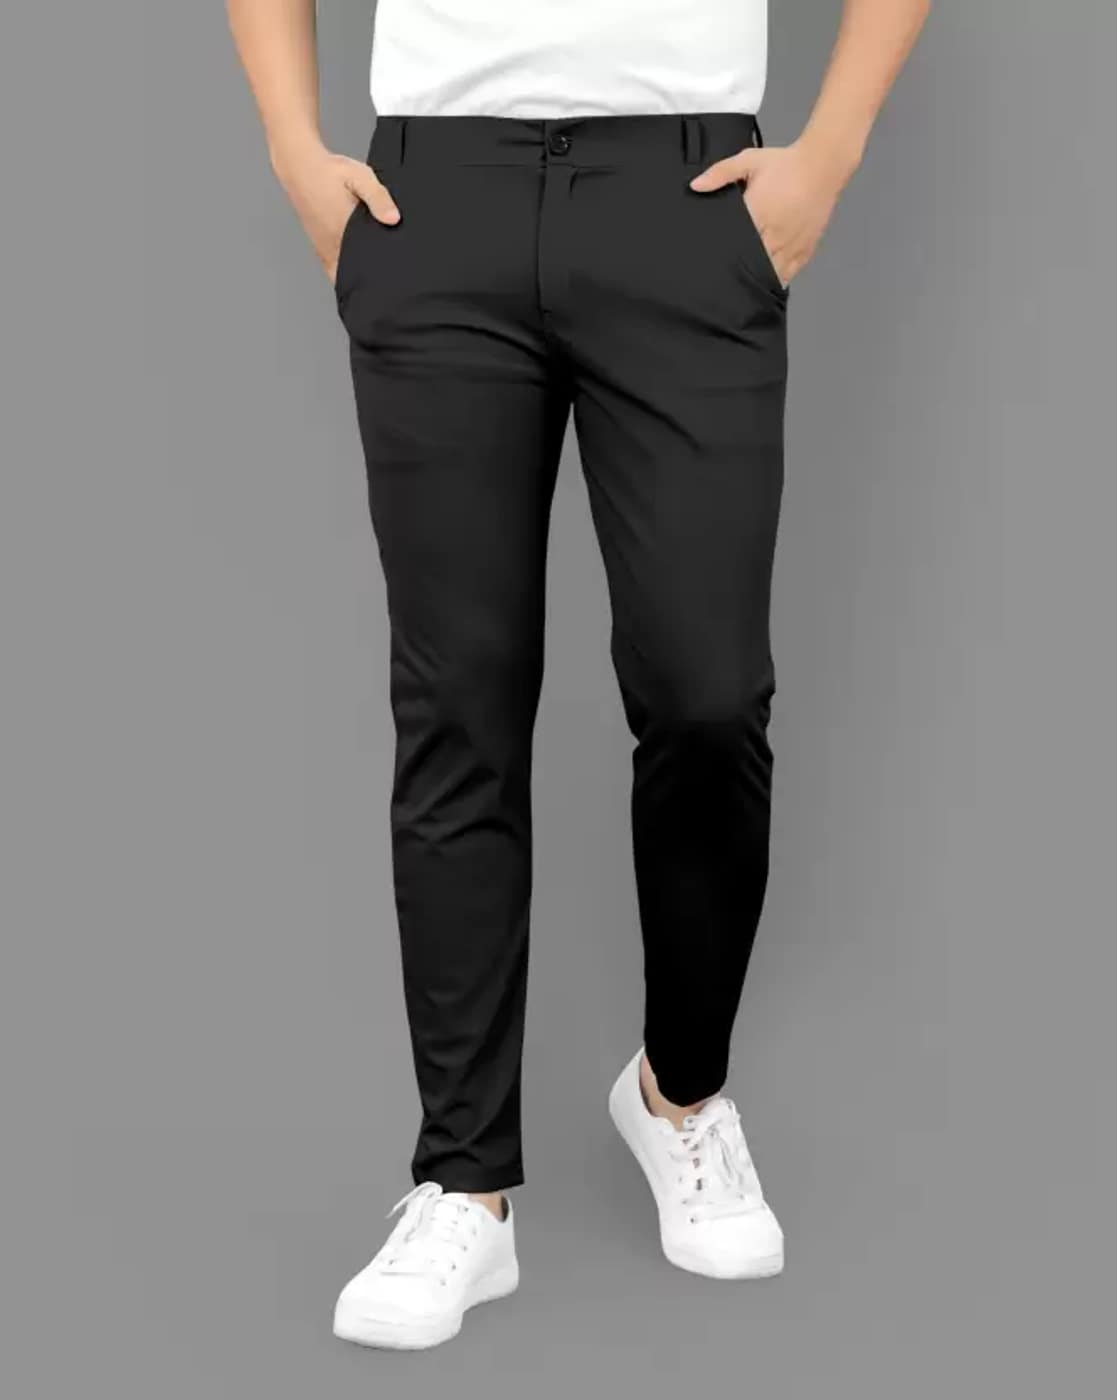 5 Pocket/Jean Men's Flat-Front Casual Pants